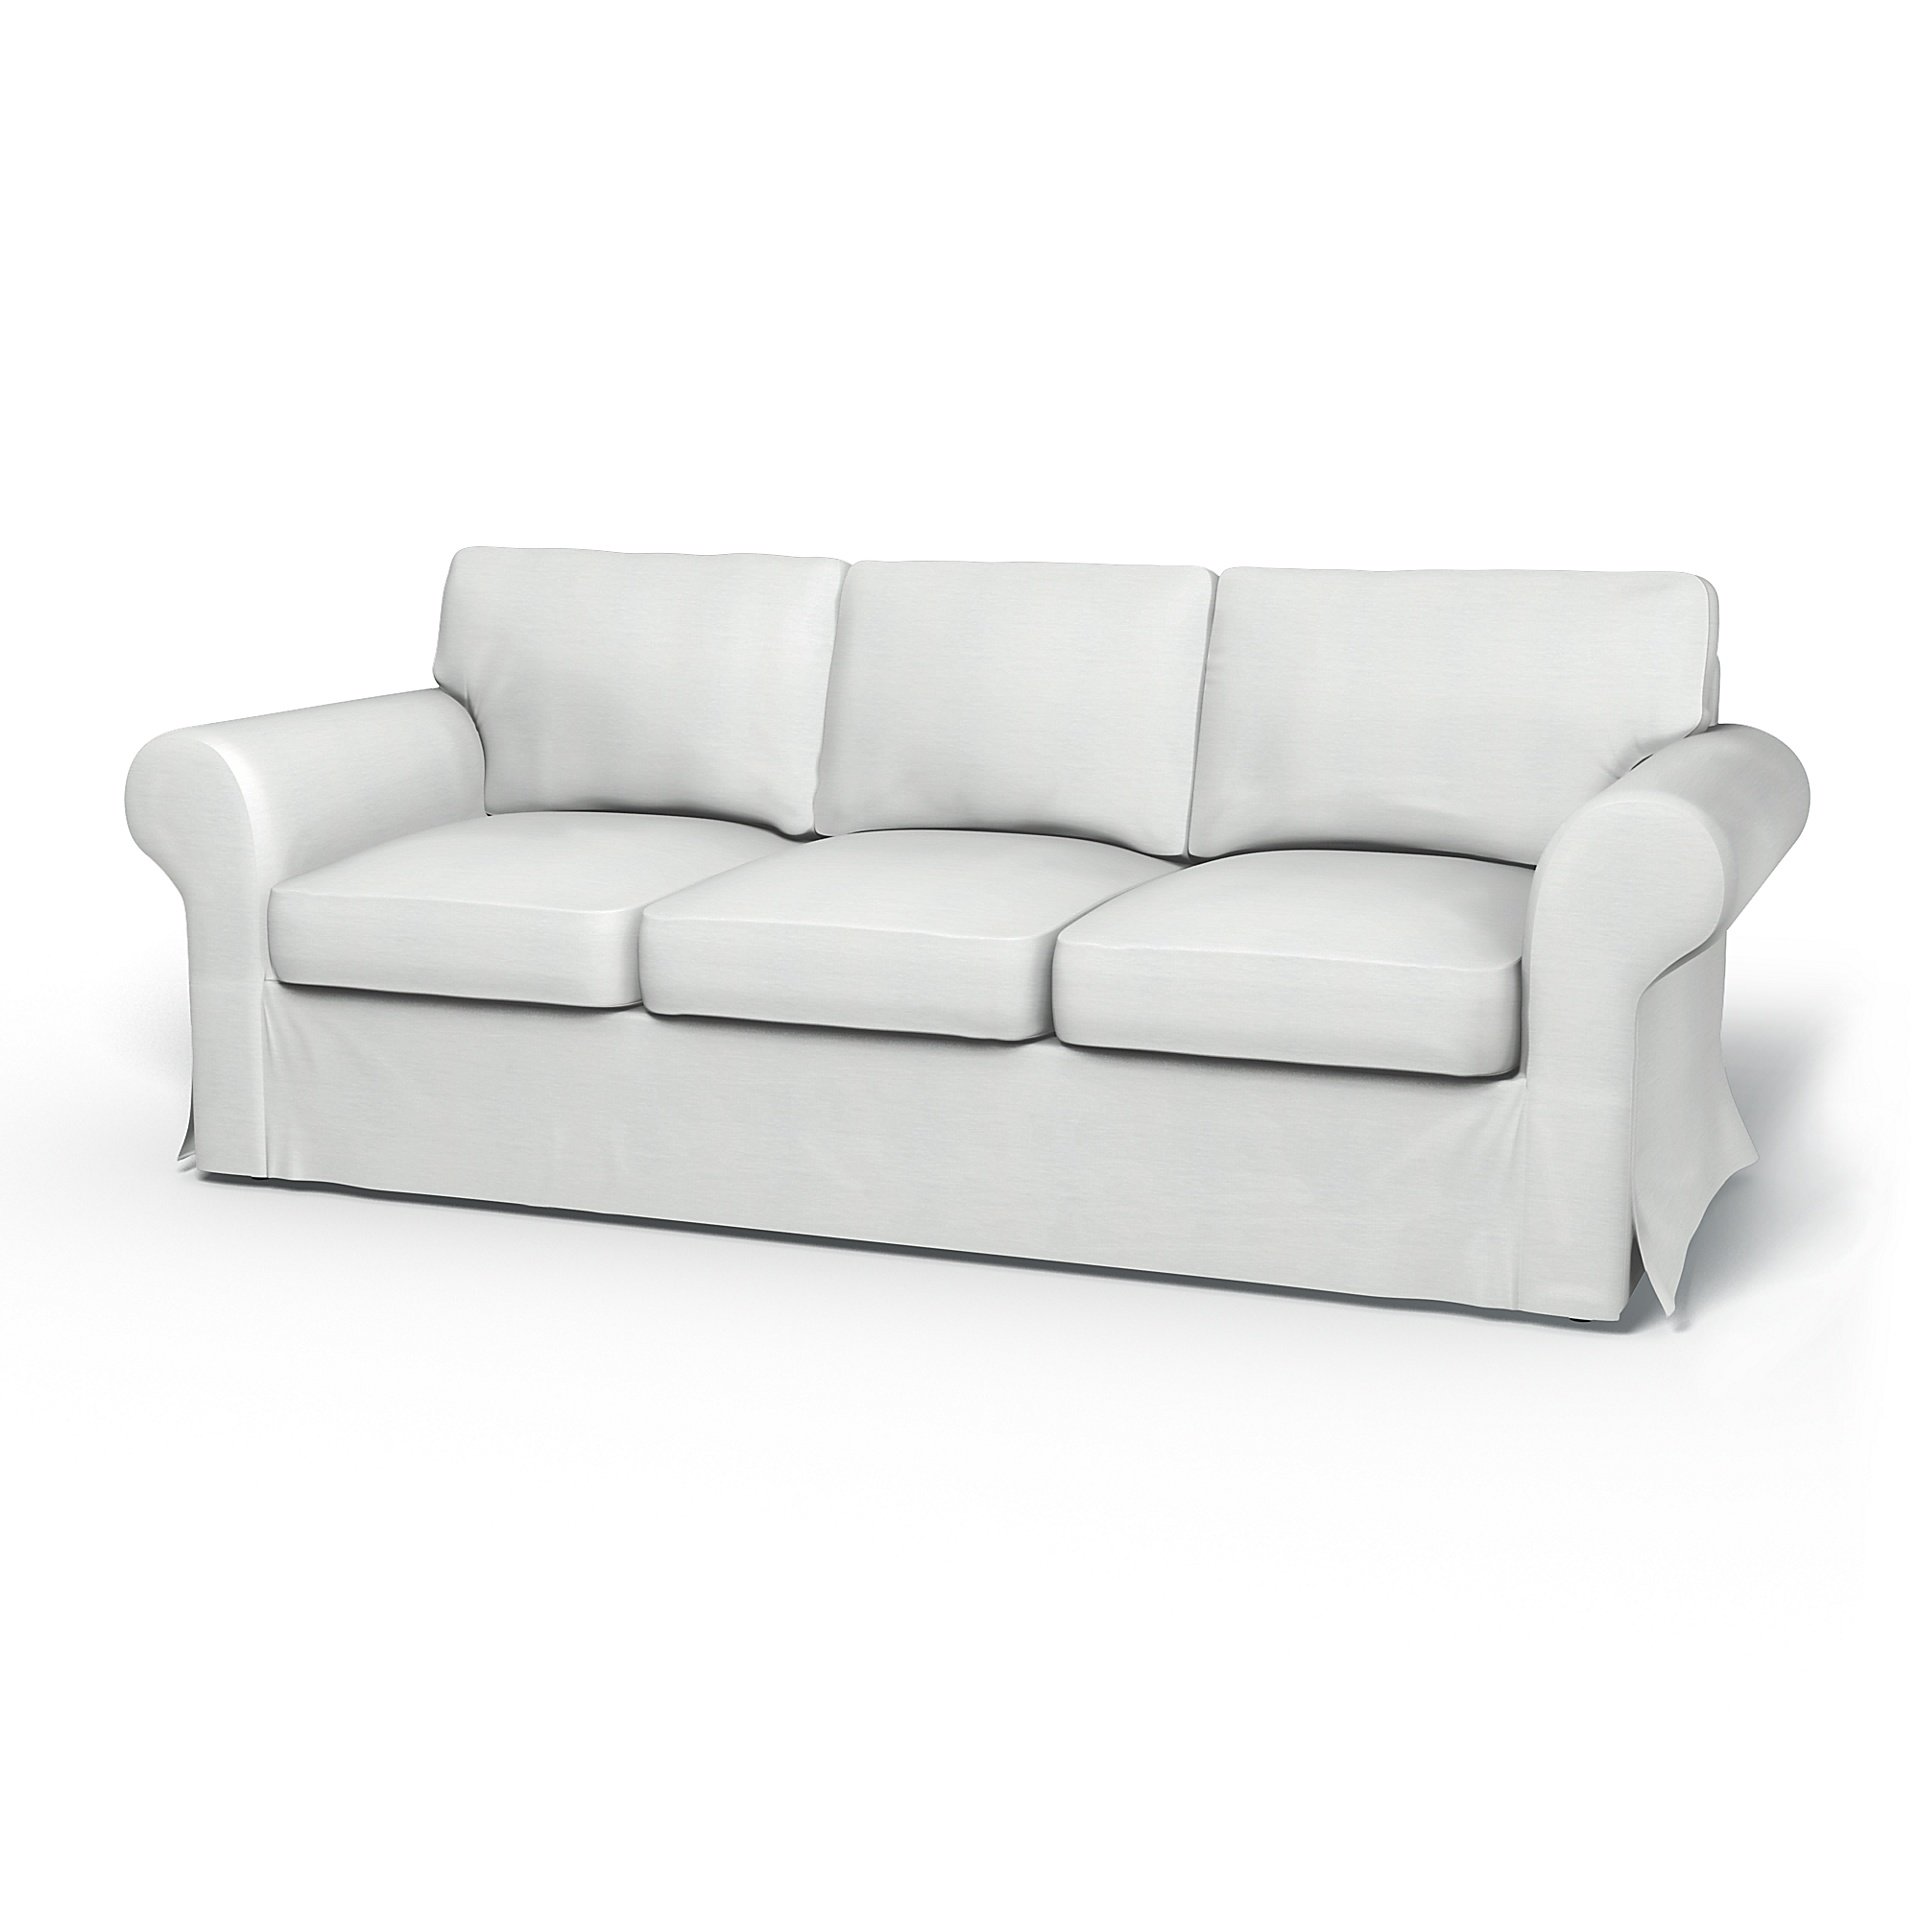 IKEA - Ektorp 3 Seater Sofa Bed Cover, White, Linen - Bemz